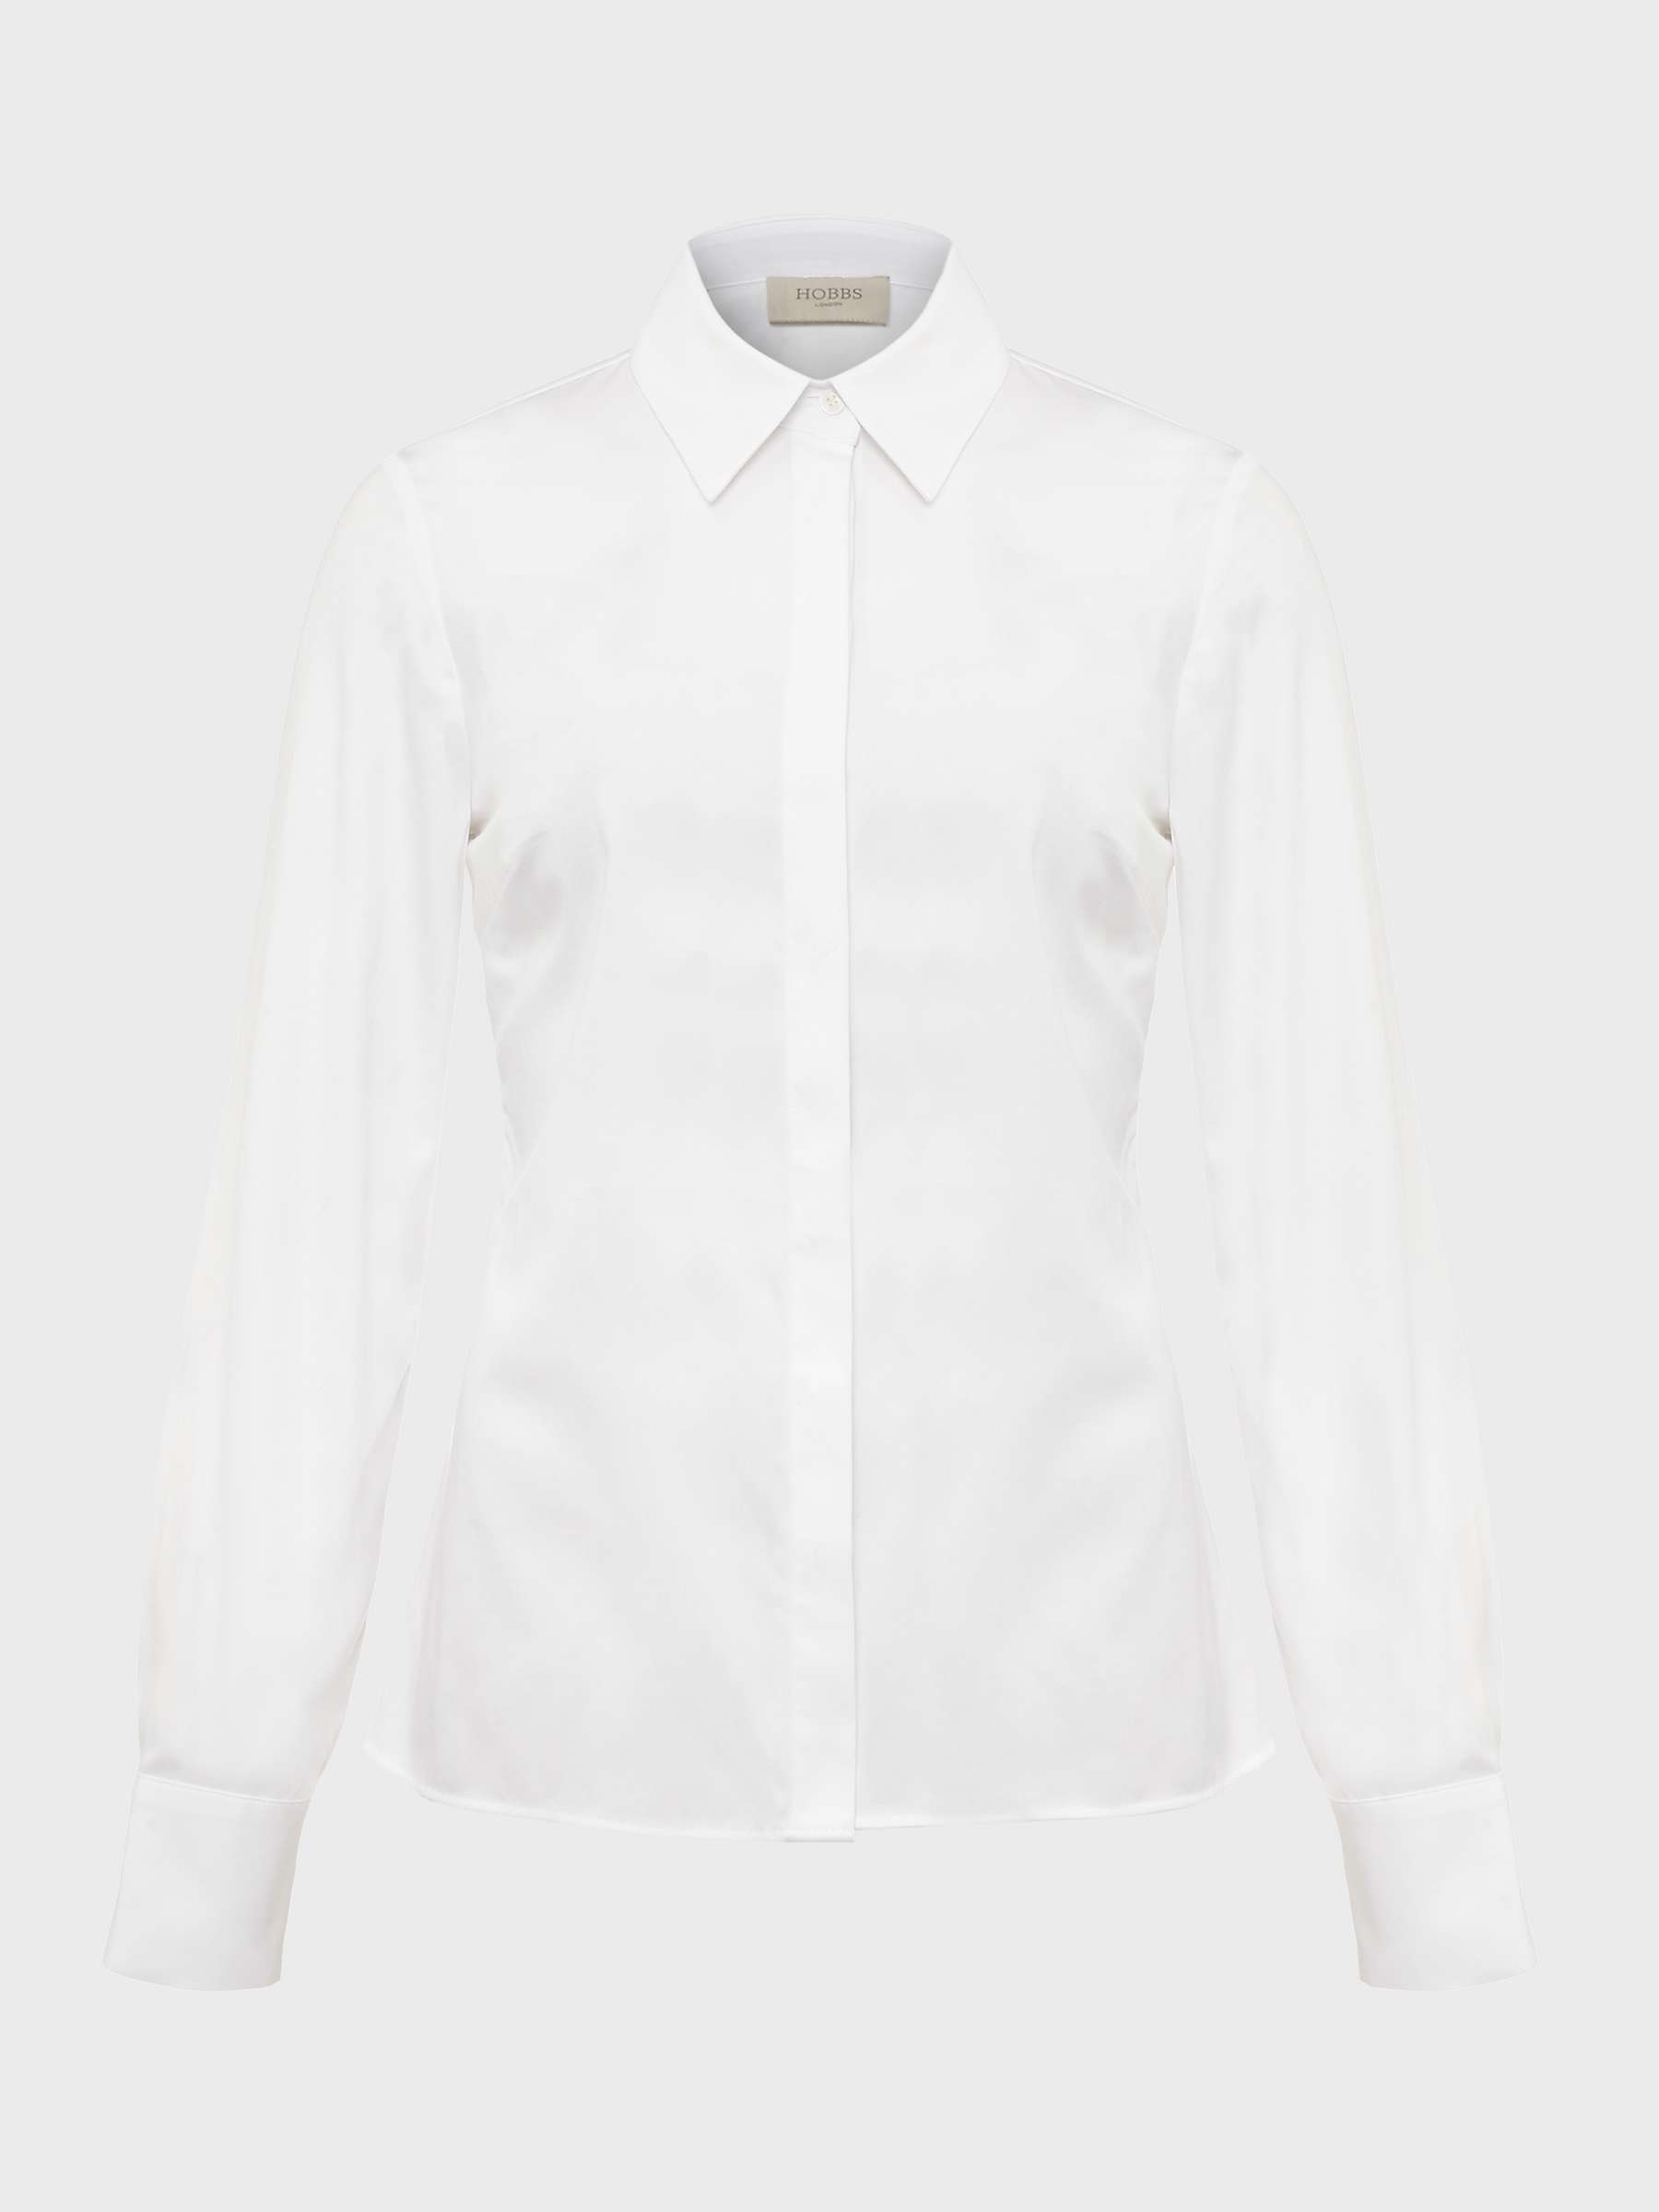 Hobbs Victoria Shirt, White at John Lewis & Partners